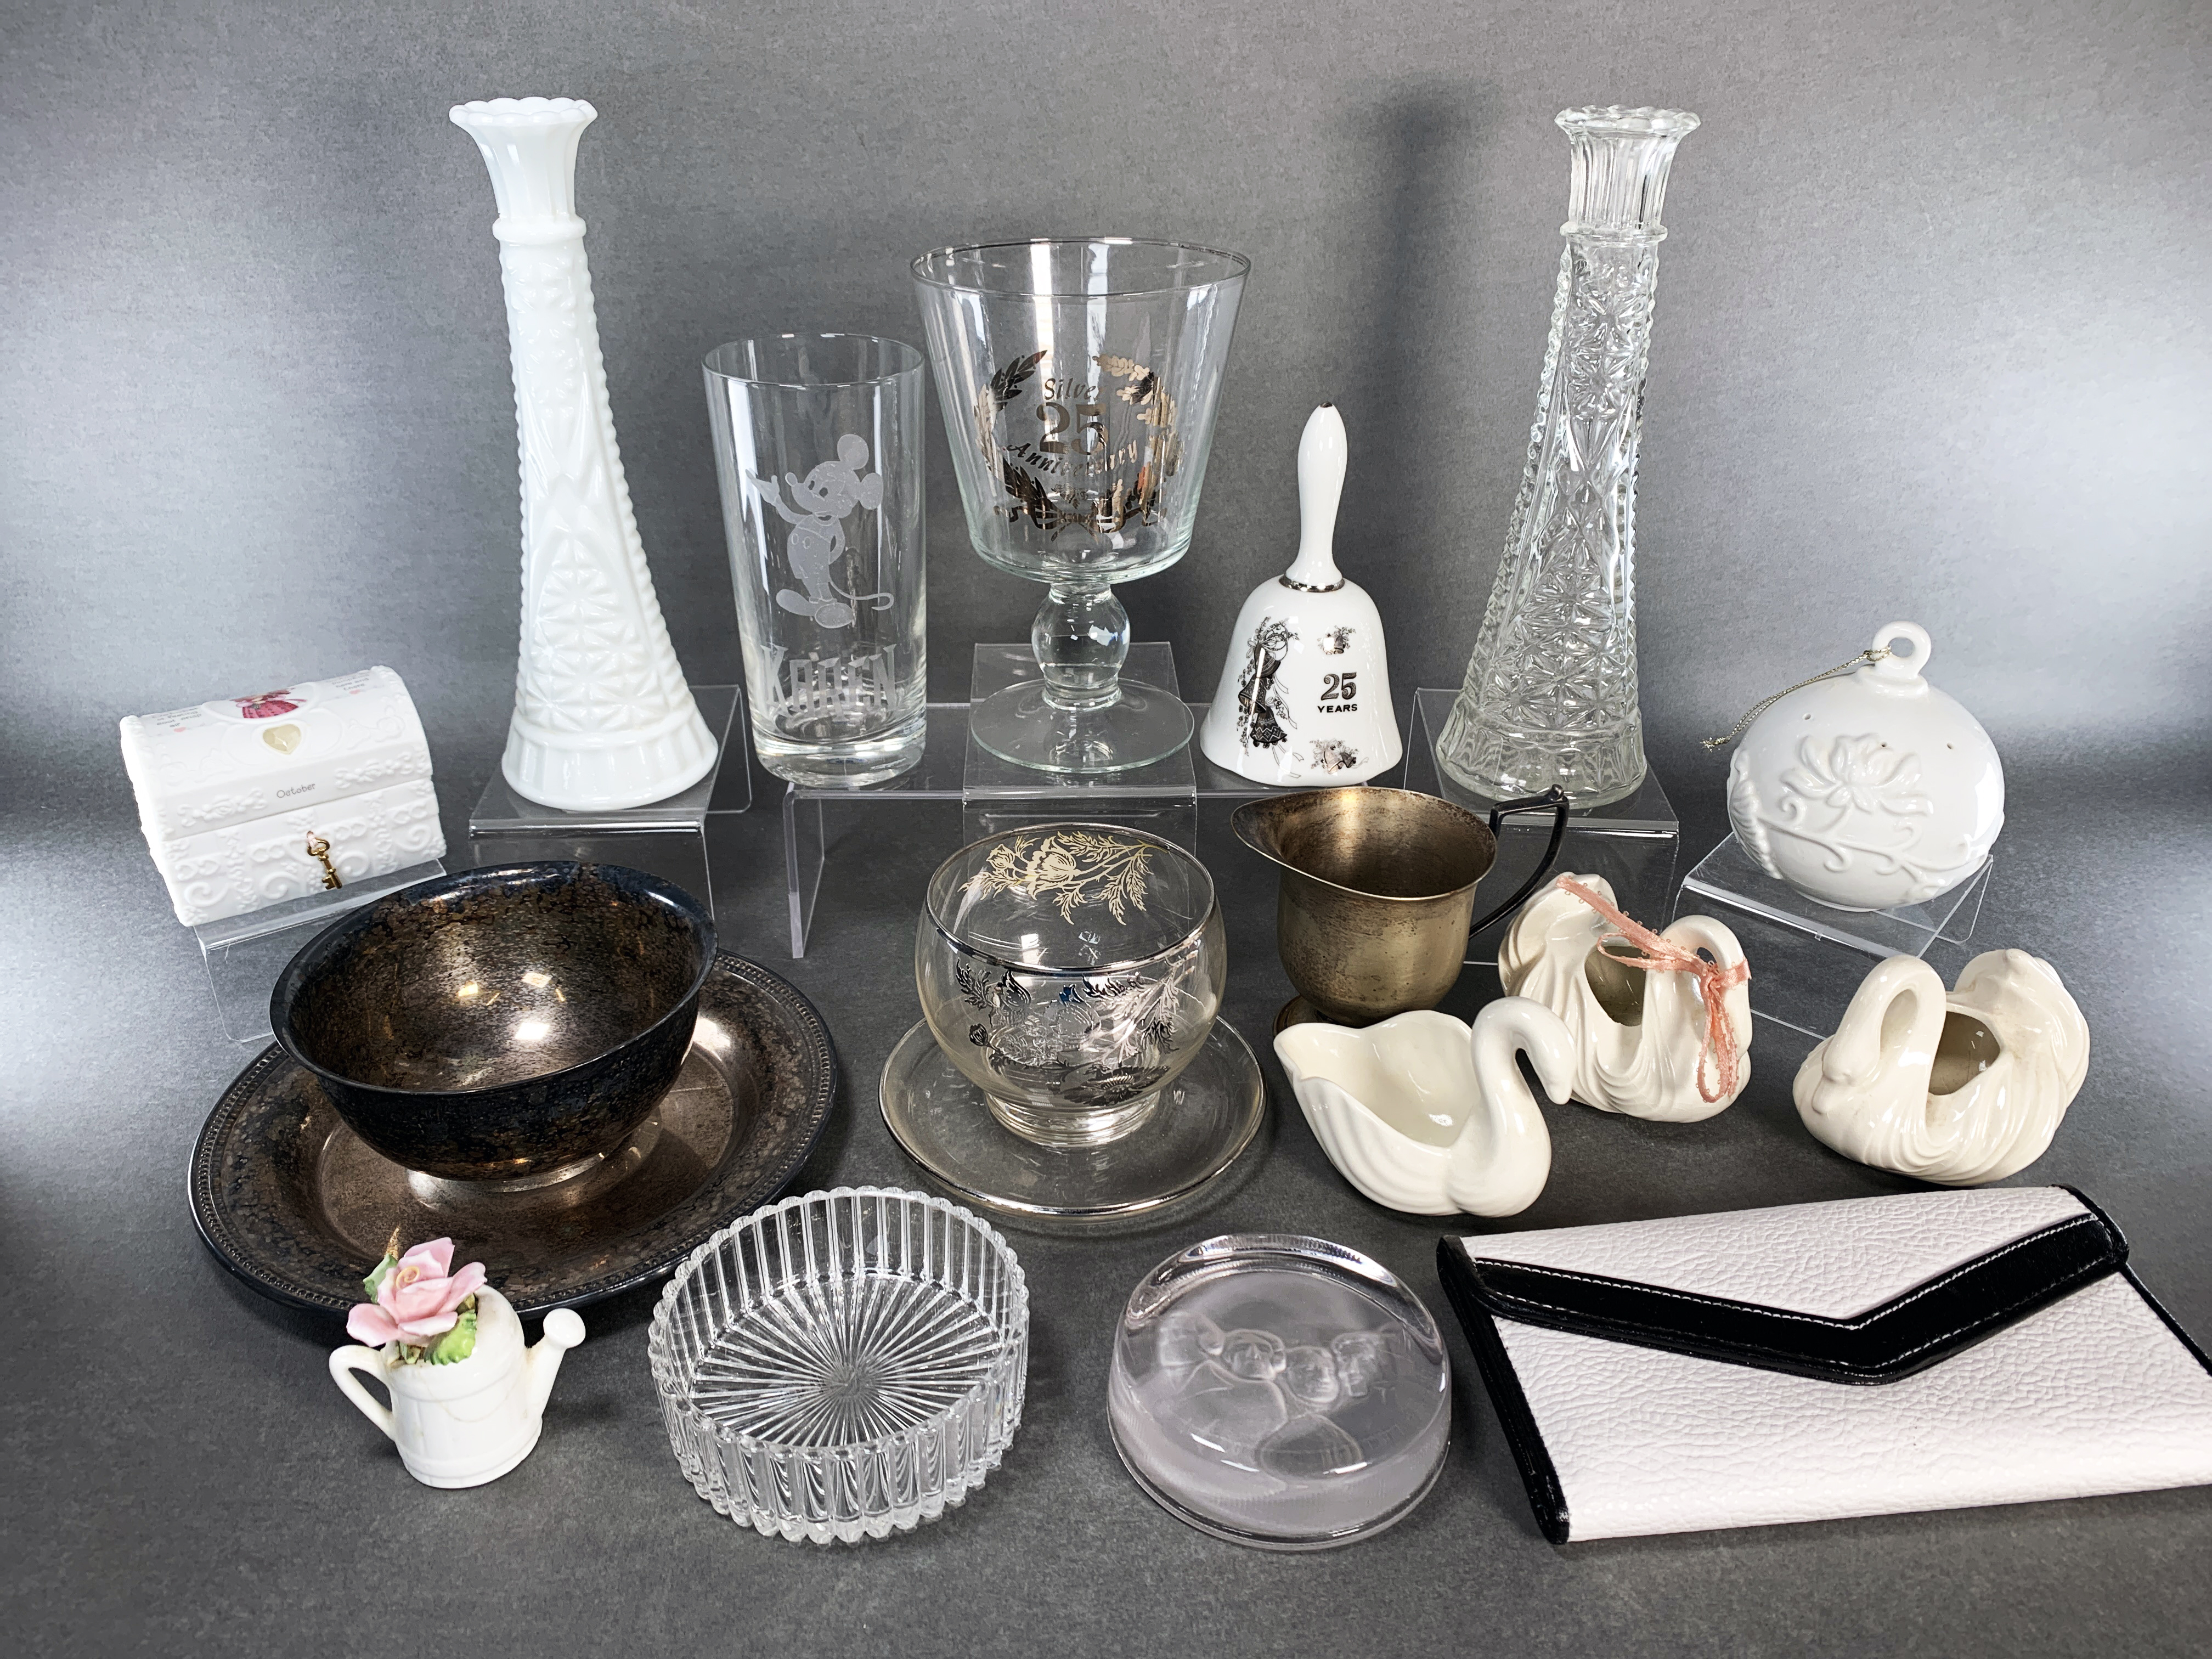 Glass Crystal Porcelain Items Disney Precious Moments Avon image 1